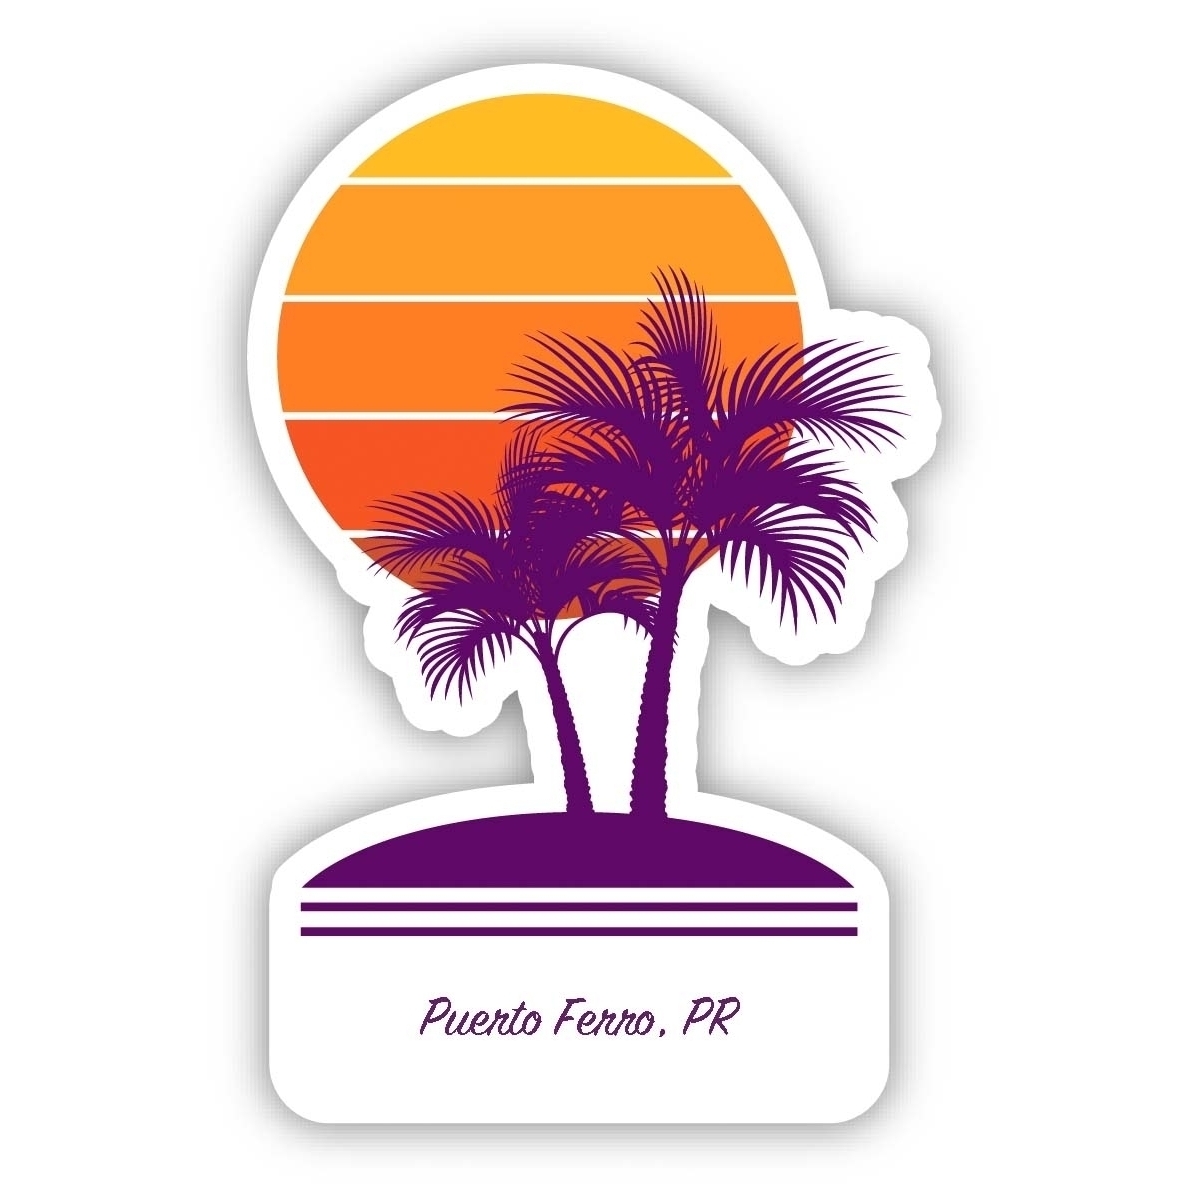 Puerto Ferro Puerto Rico Souvenir 4 Inch Vinyl Decal Sticker Palm Design